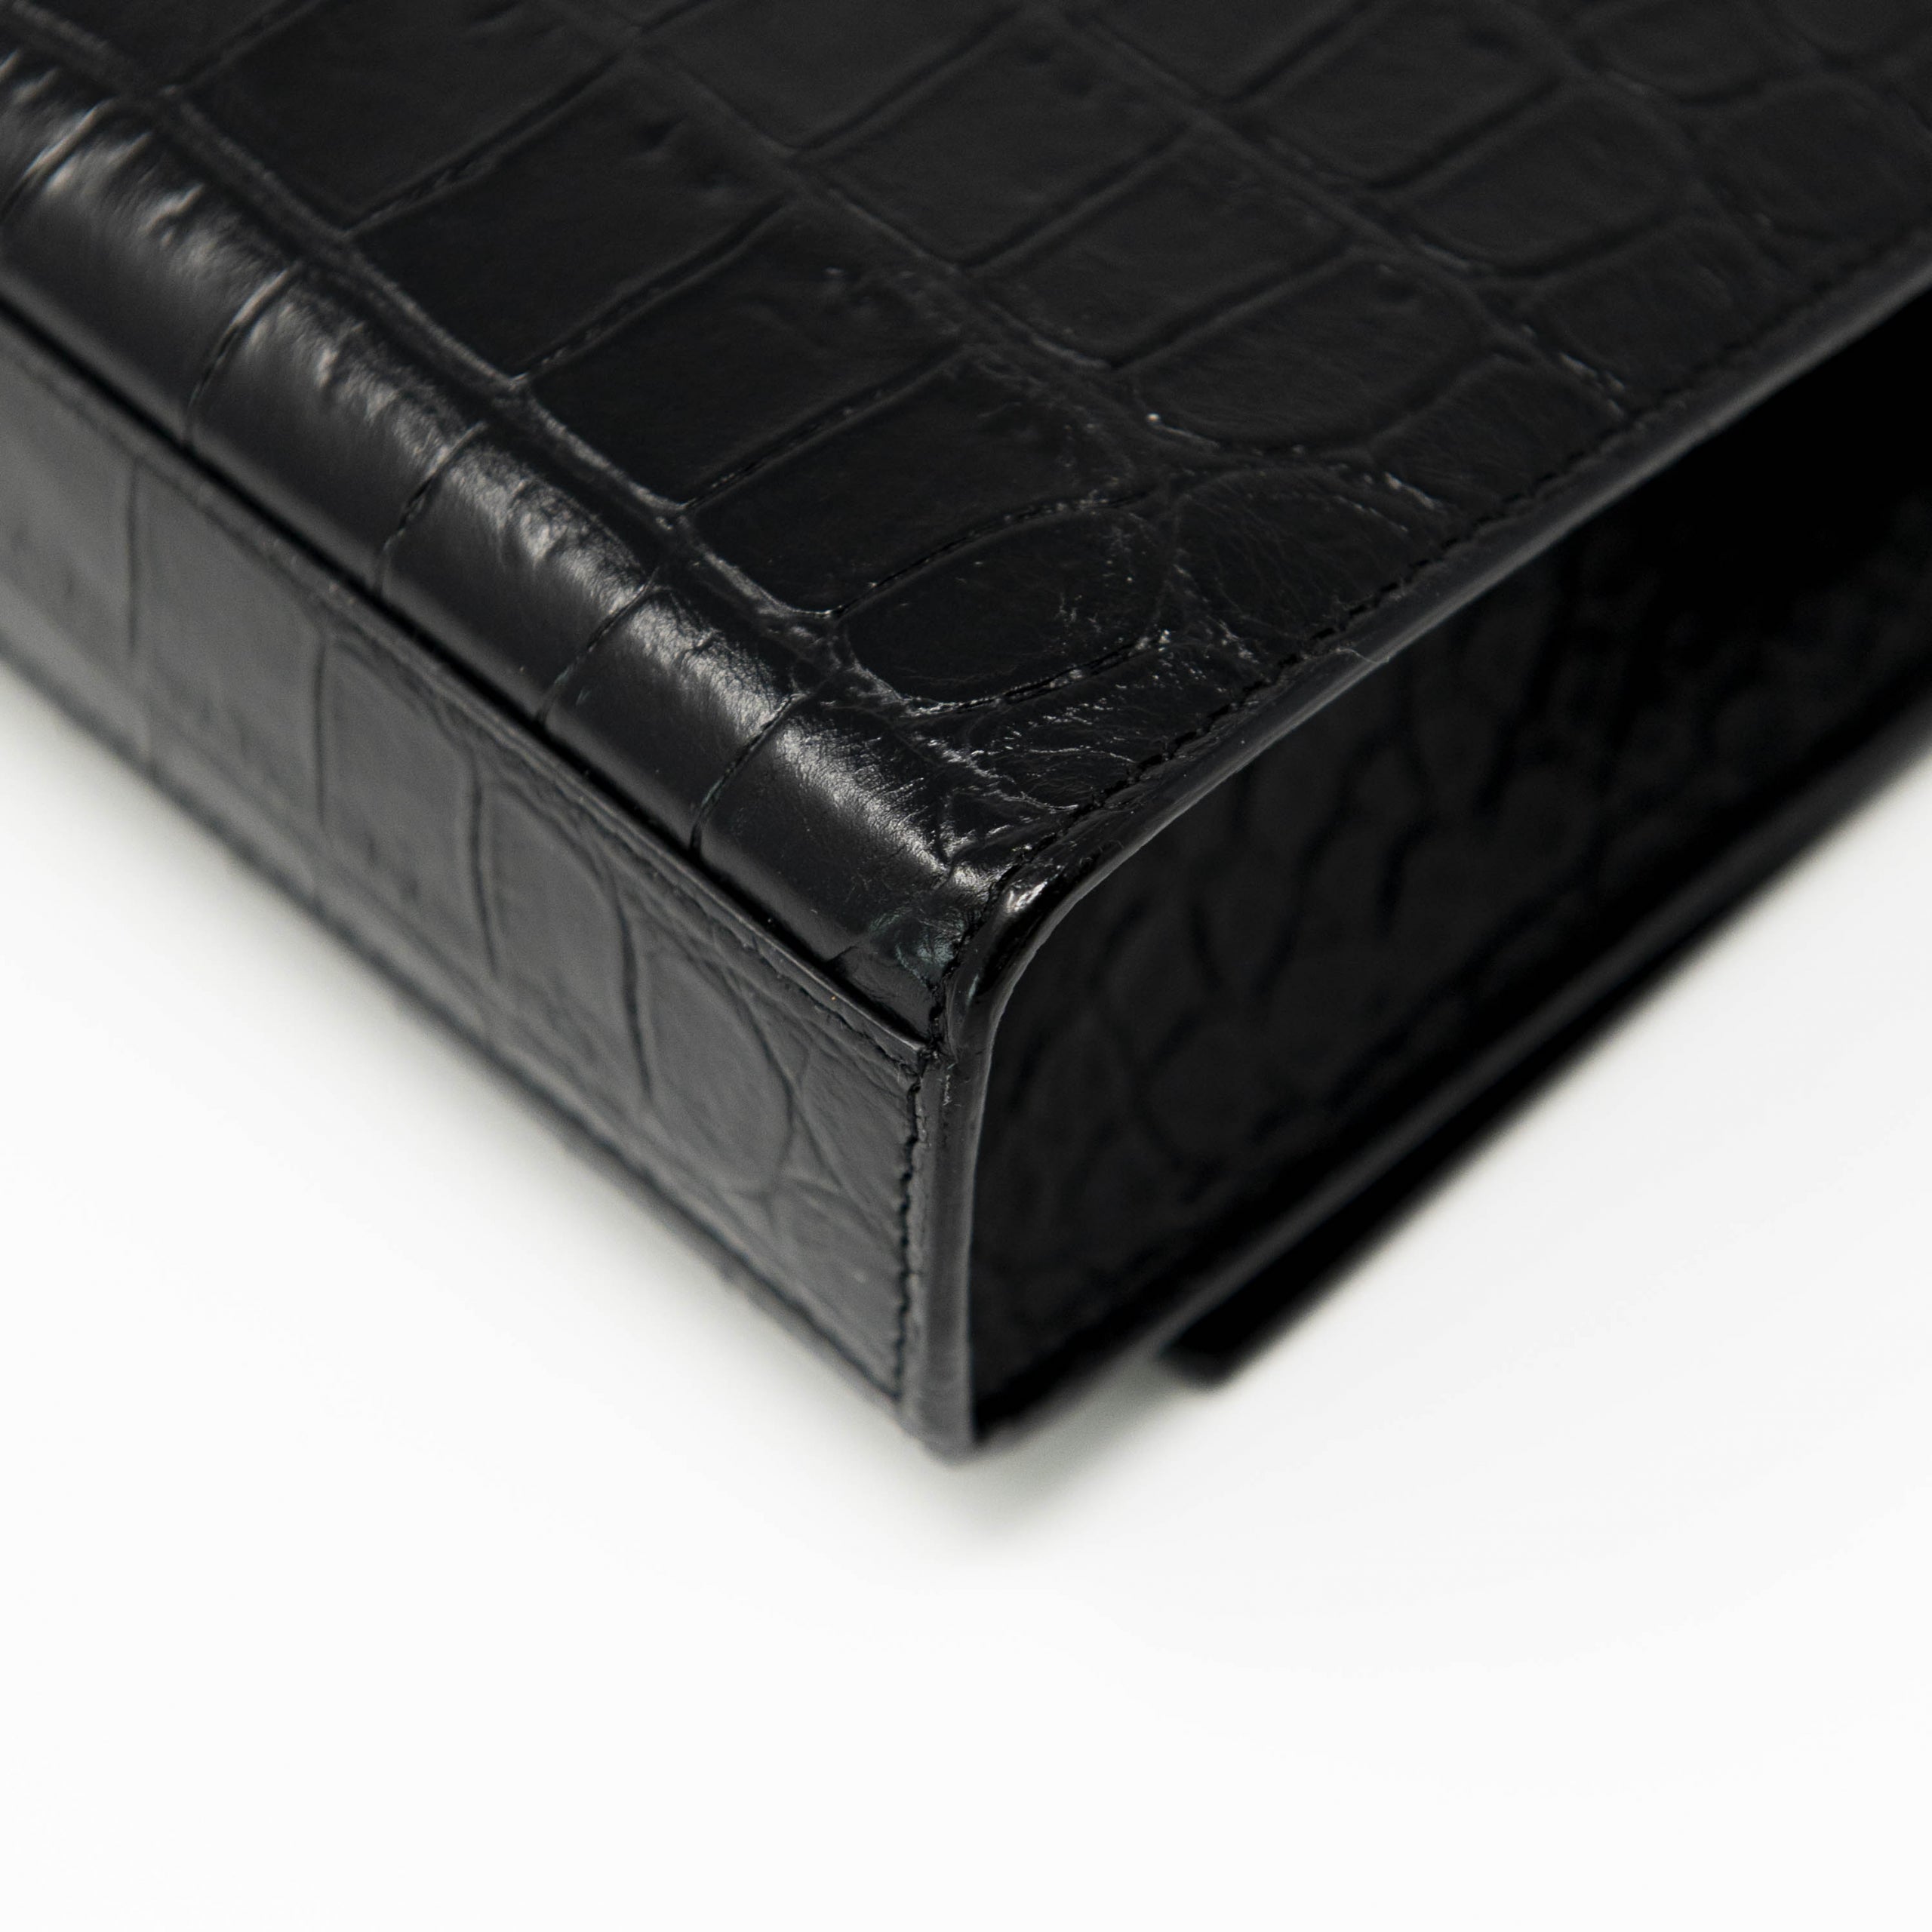 Saint Laurent Black Croc Medium Kate Bag